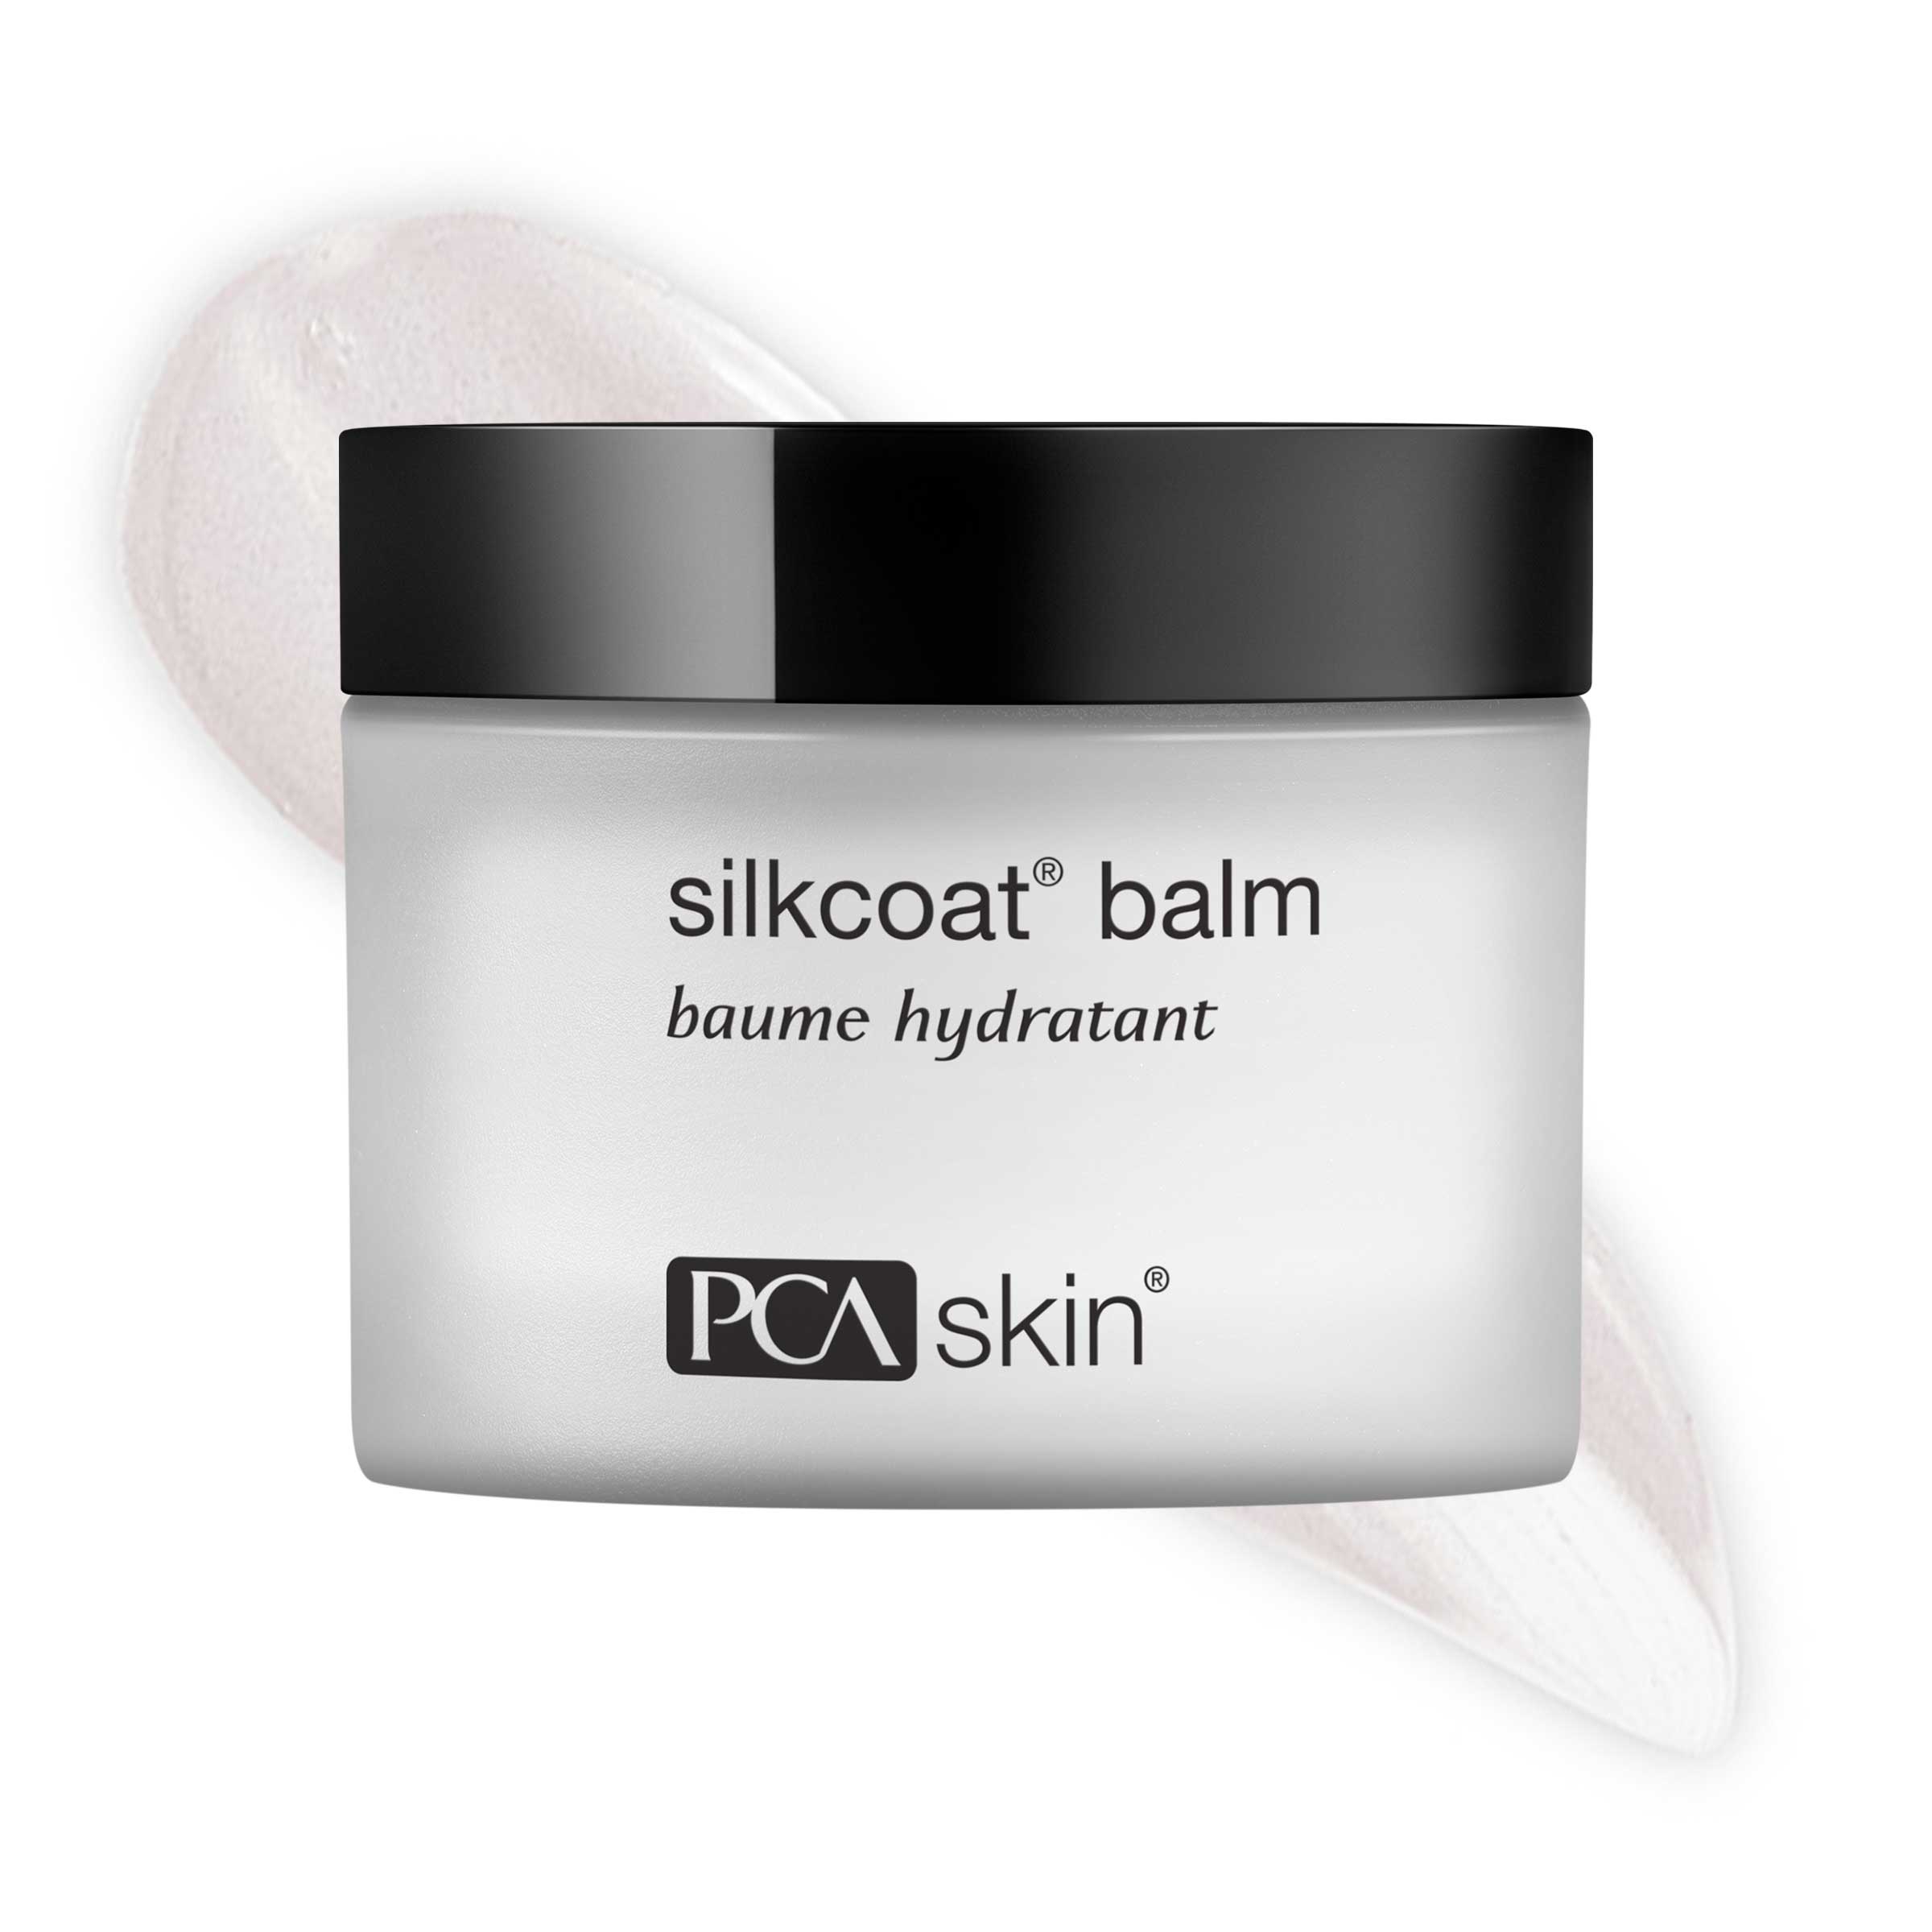 PCA Skin Silkcoat Balm (1.7 oz)